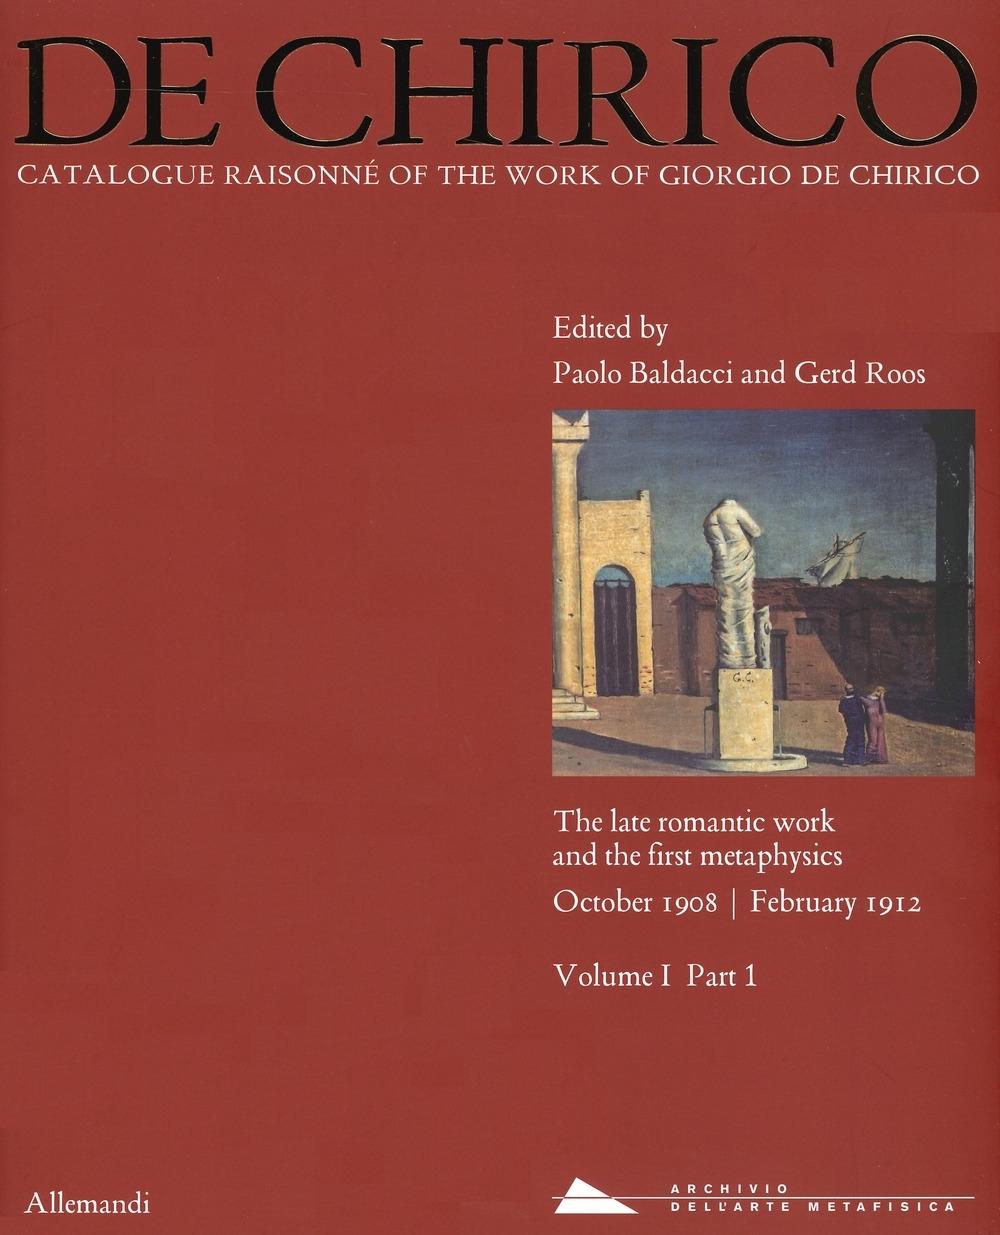 DE CHIRICO. CATALOGUE RAISONNÈ OF THE WORK OF GIORGIO DE CHIRICO " THE LATE ROMANTIC WORK AND THE FIRST MATAPHYSICS. OCTOBER 1908 - FEBRUARY 1912. VOL. I. TOMO 1"